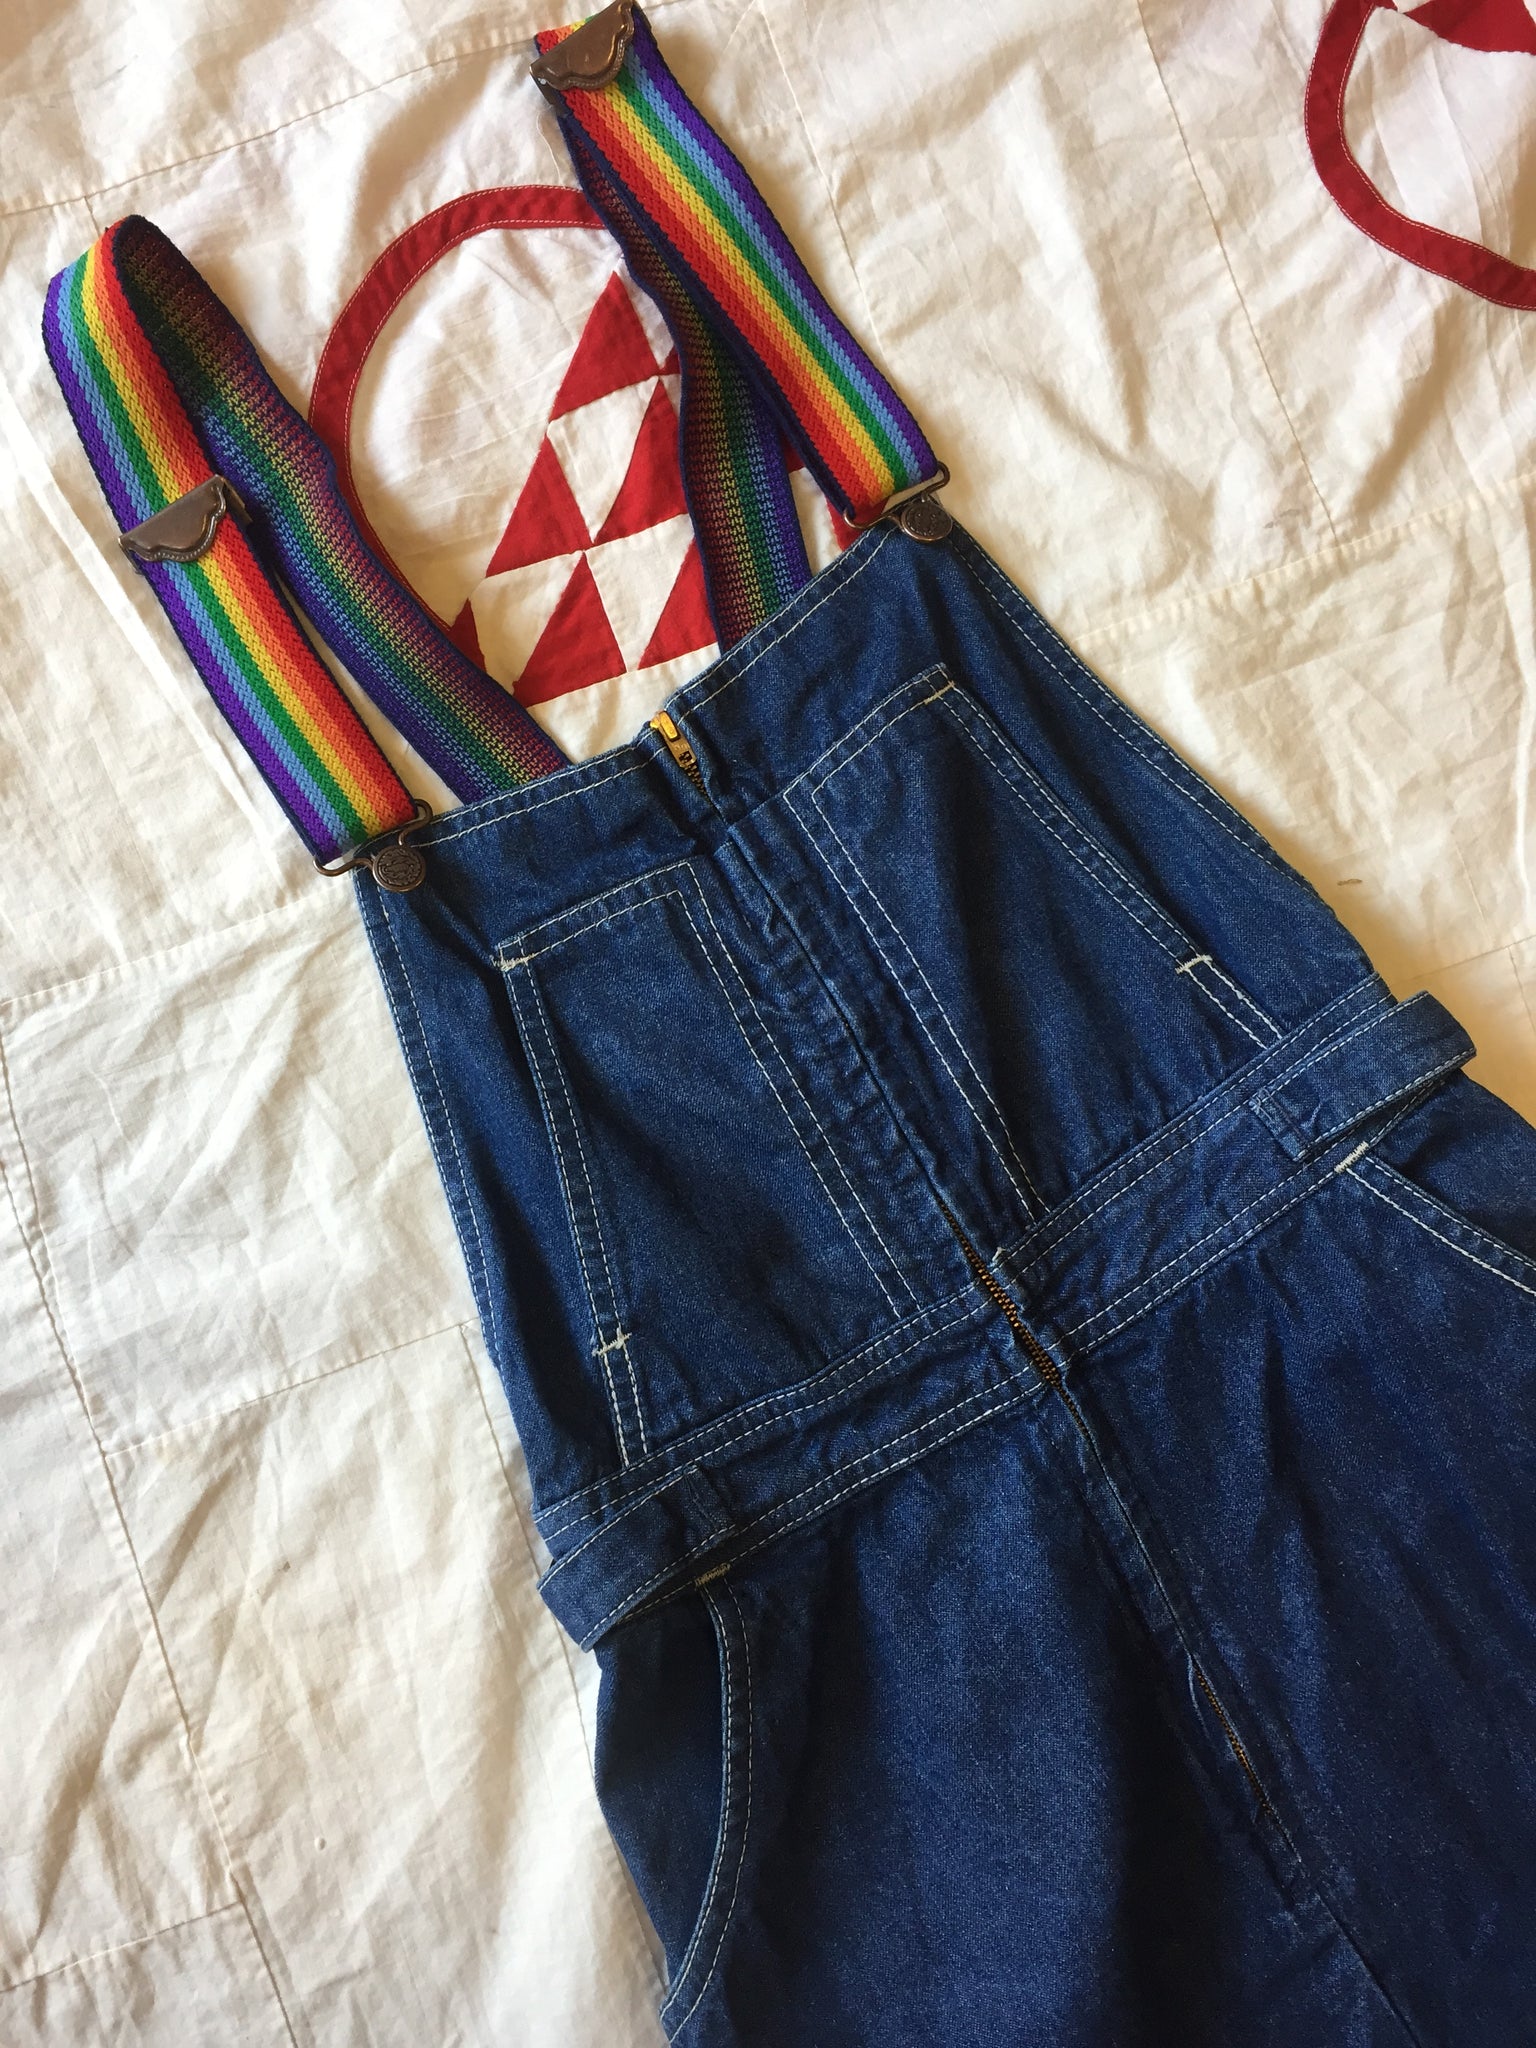 rainbow strap overalls